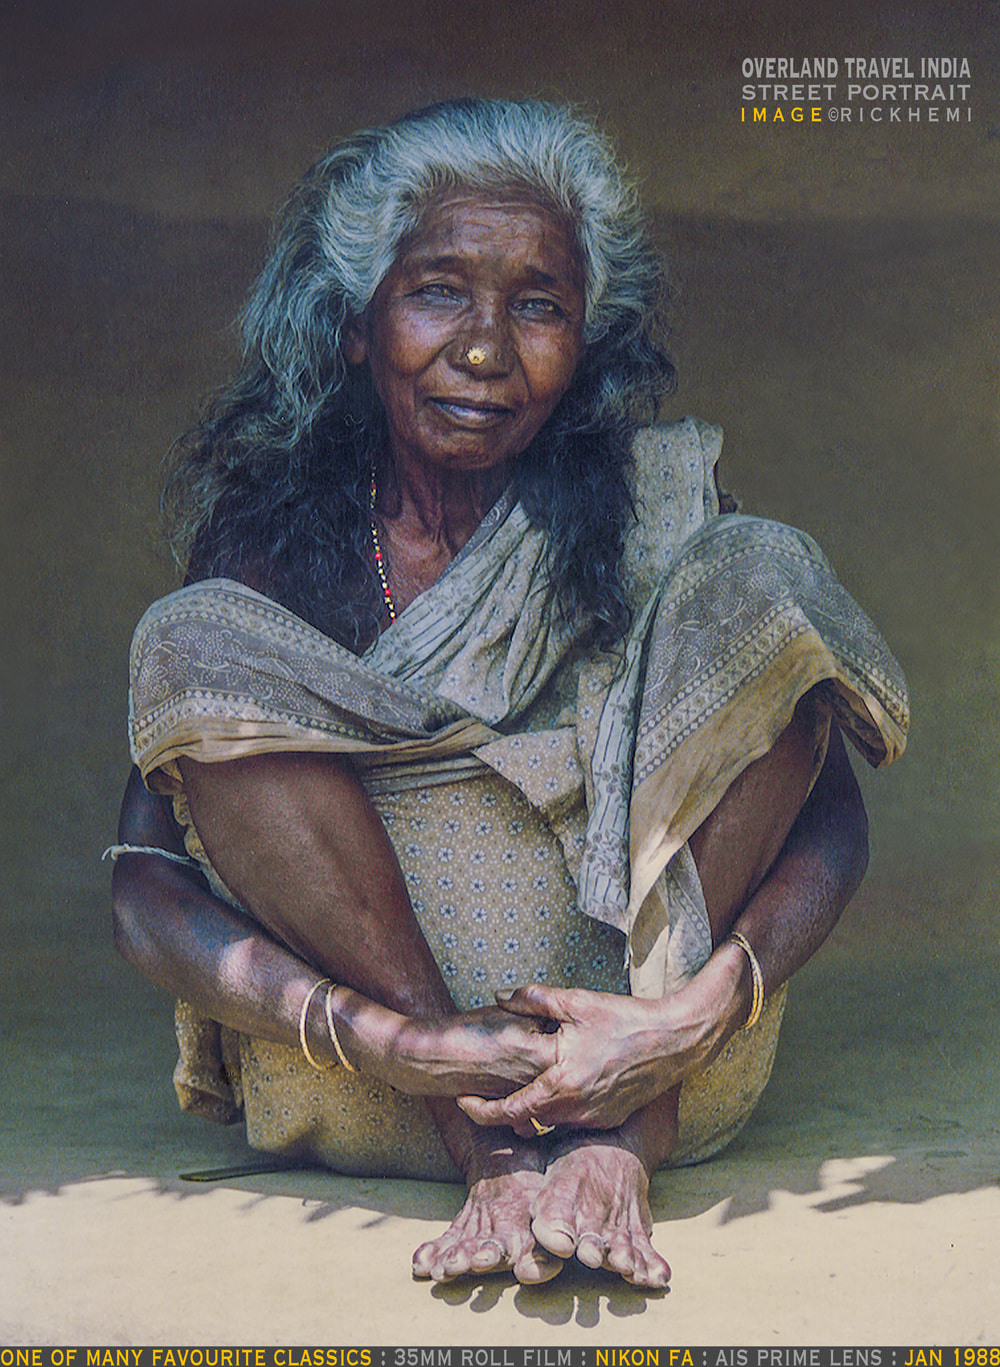 solo travel India, classic street portrait, SLR roll film image by Rick Hemi